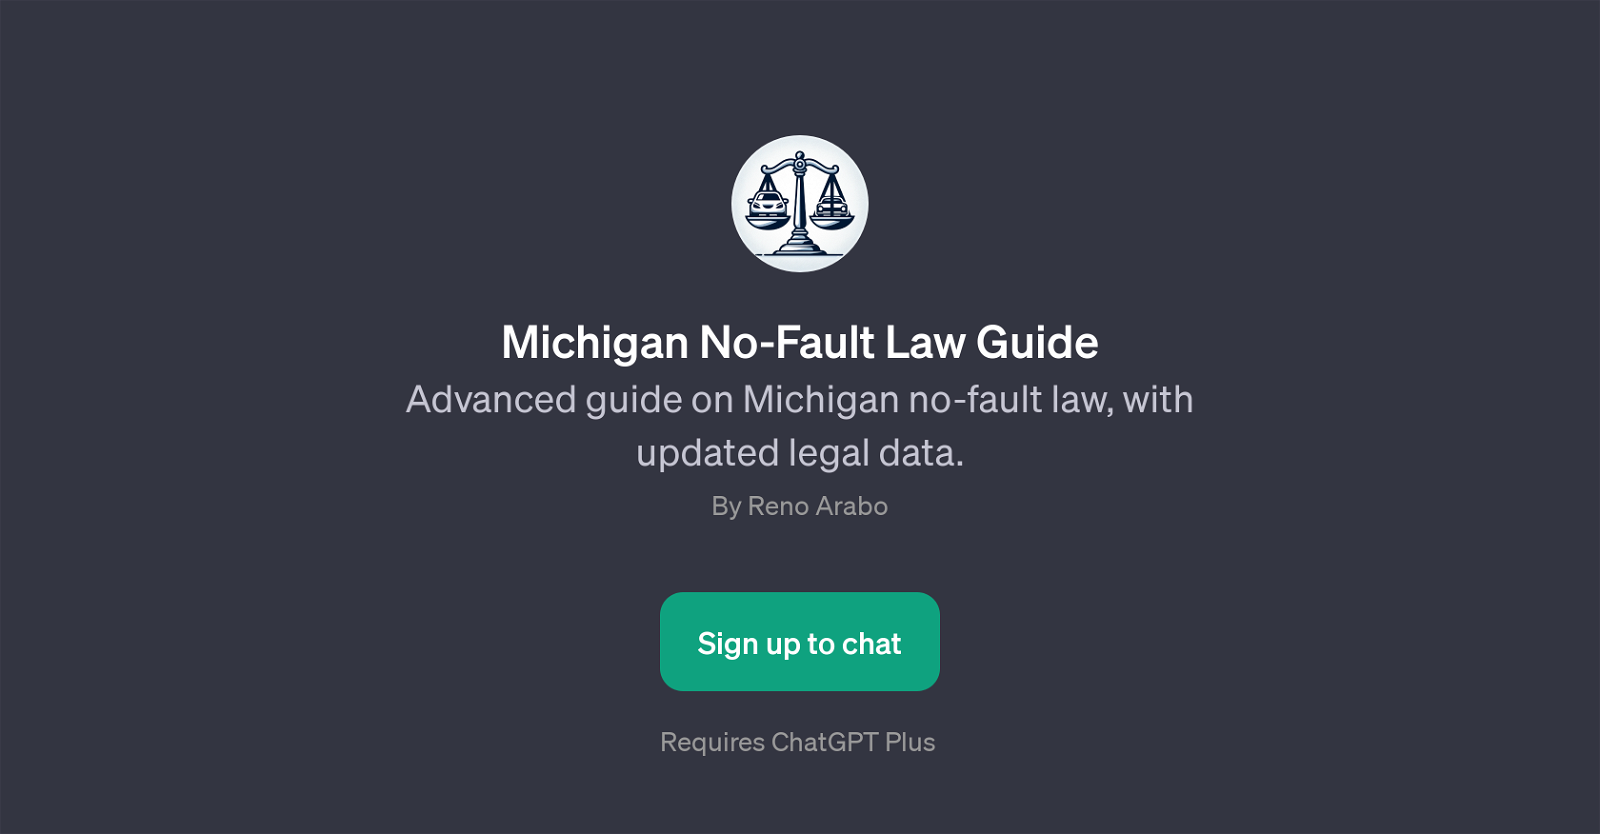 Michigan No-Fault Law Guide website